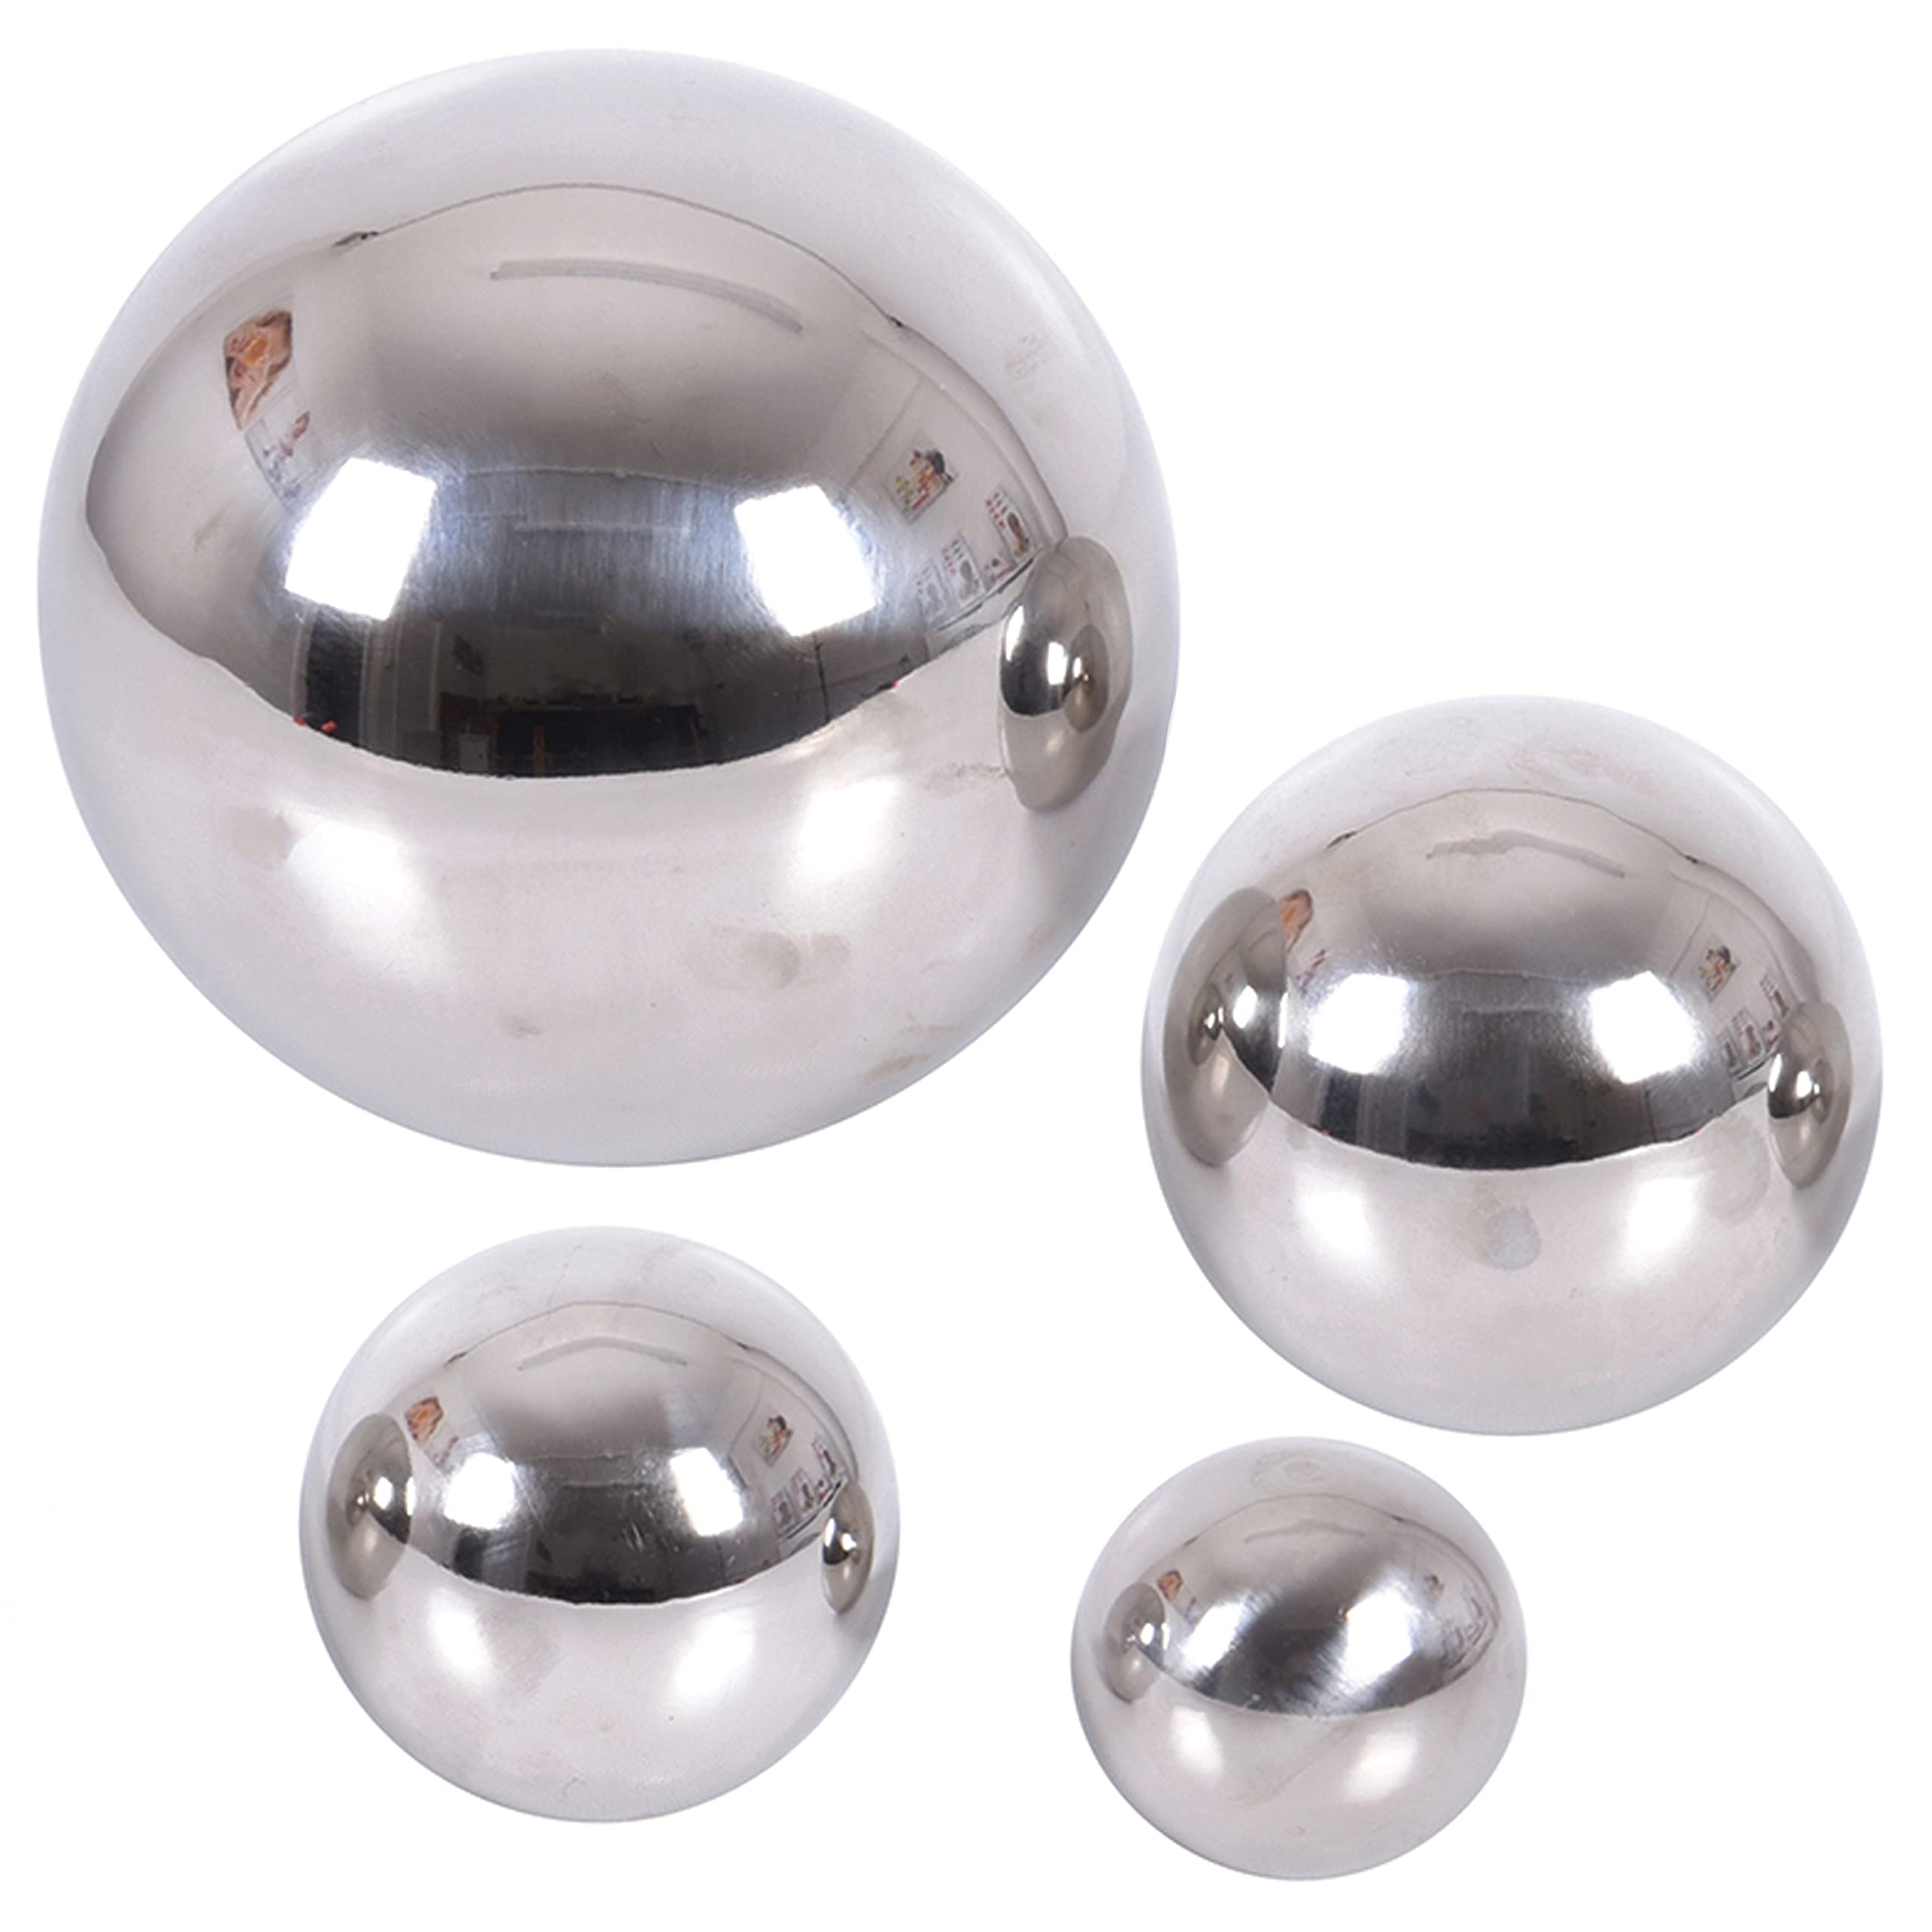 TickiT 72201 Sensory Reflective Silver Balls